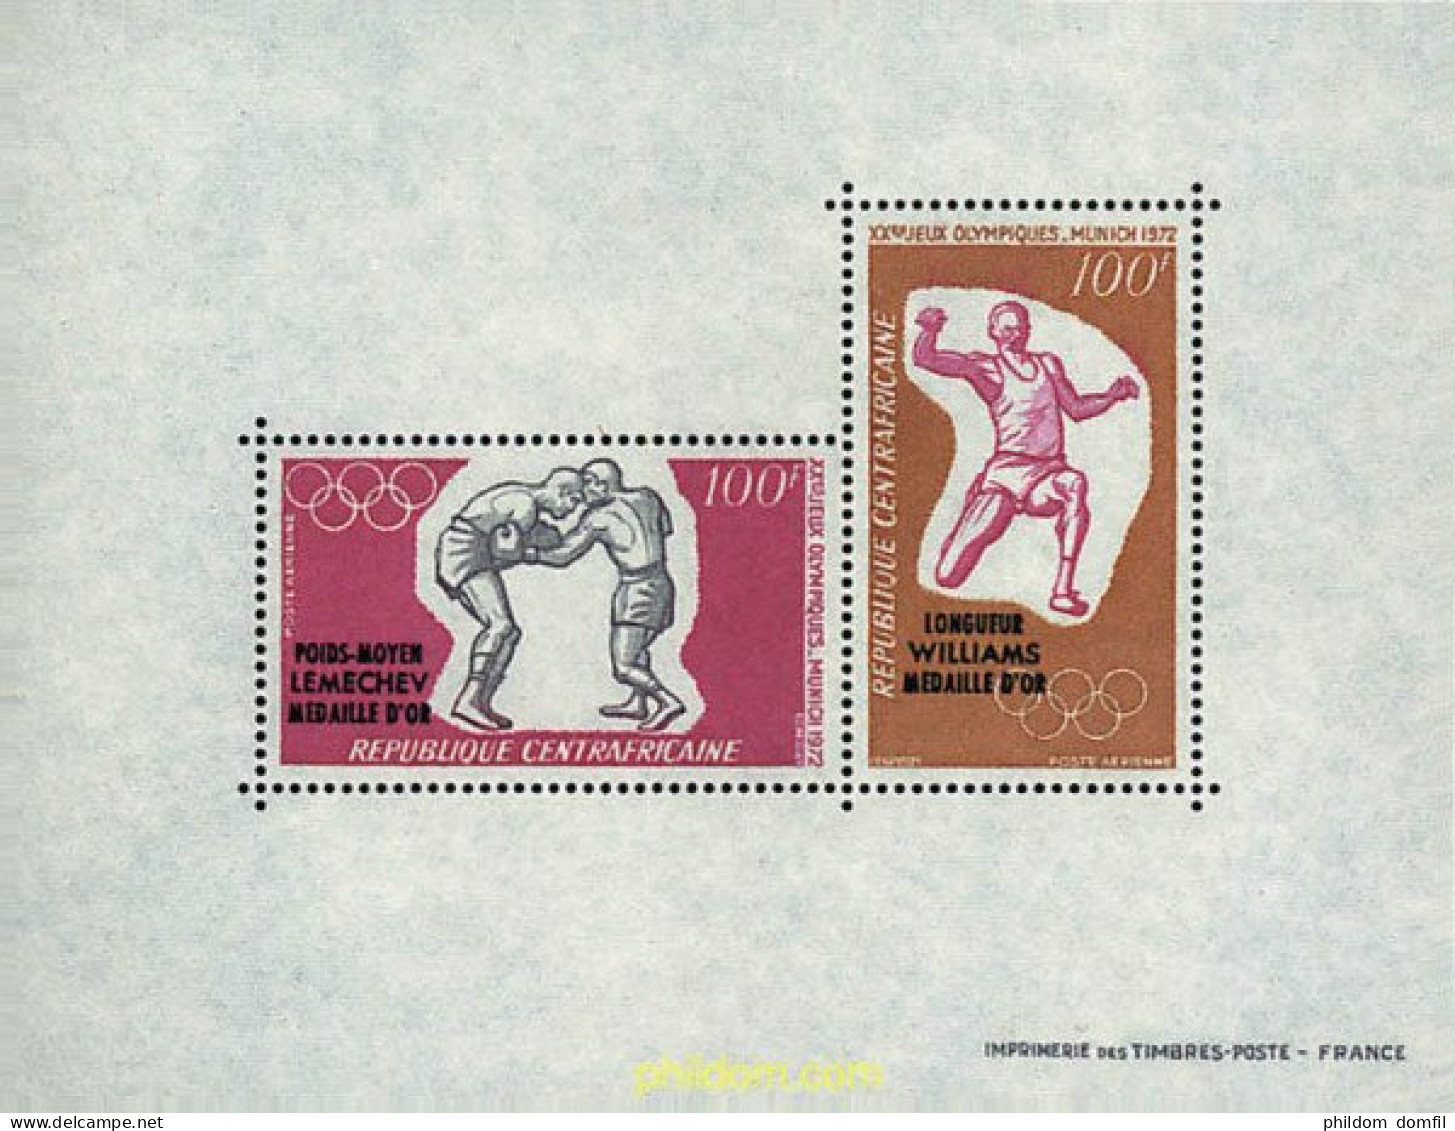 50778 MNH CENTROAFRICANA 1972 20 JUEGOS OLIMPICOS VERANO MUNICH 1972 - República Centroafricana